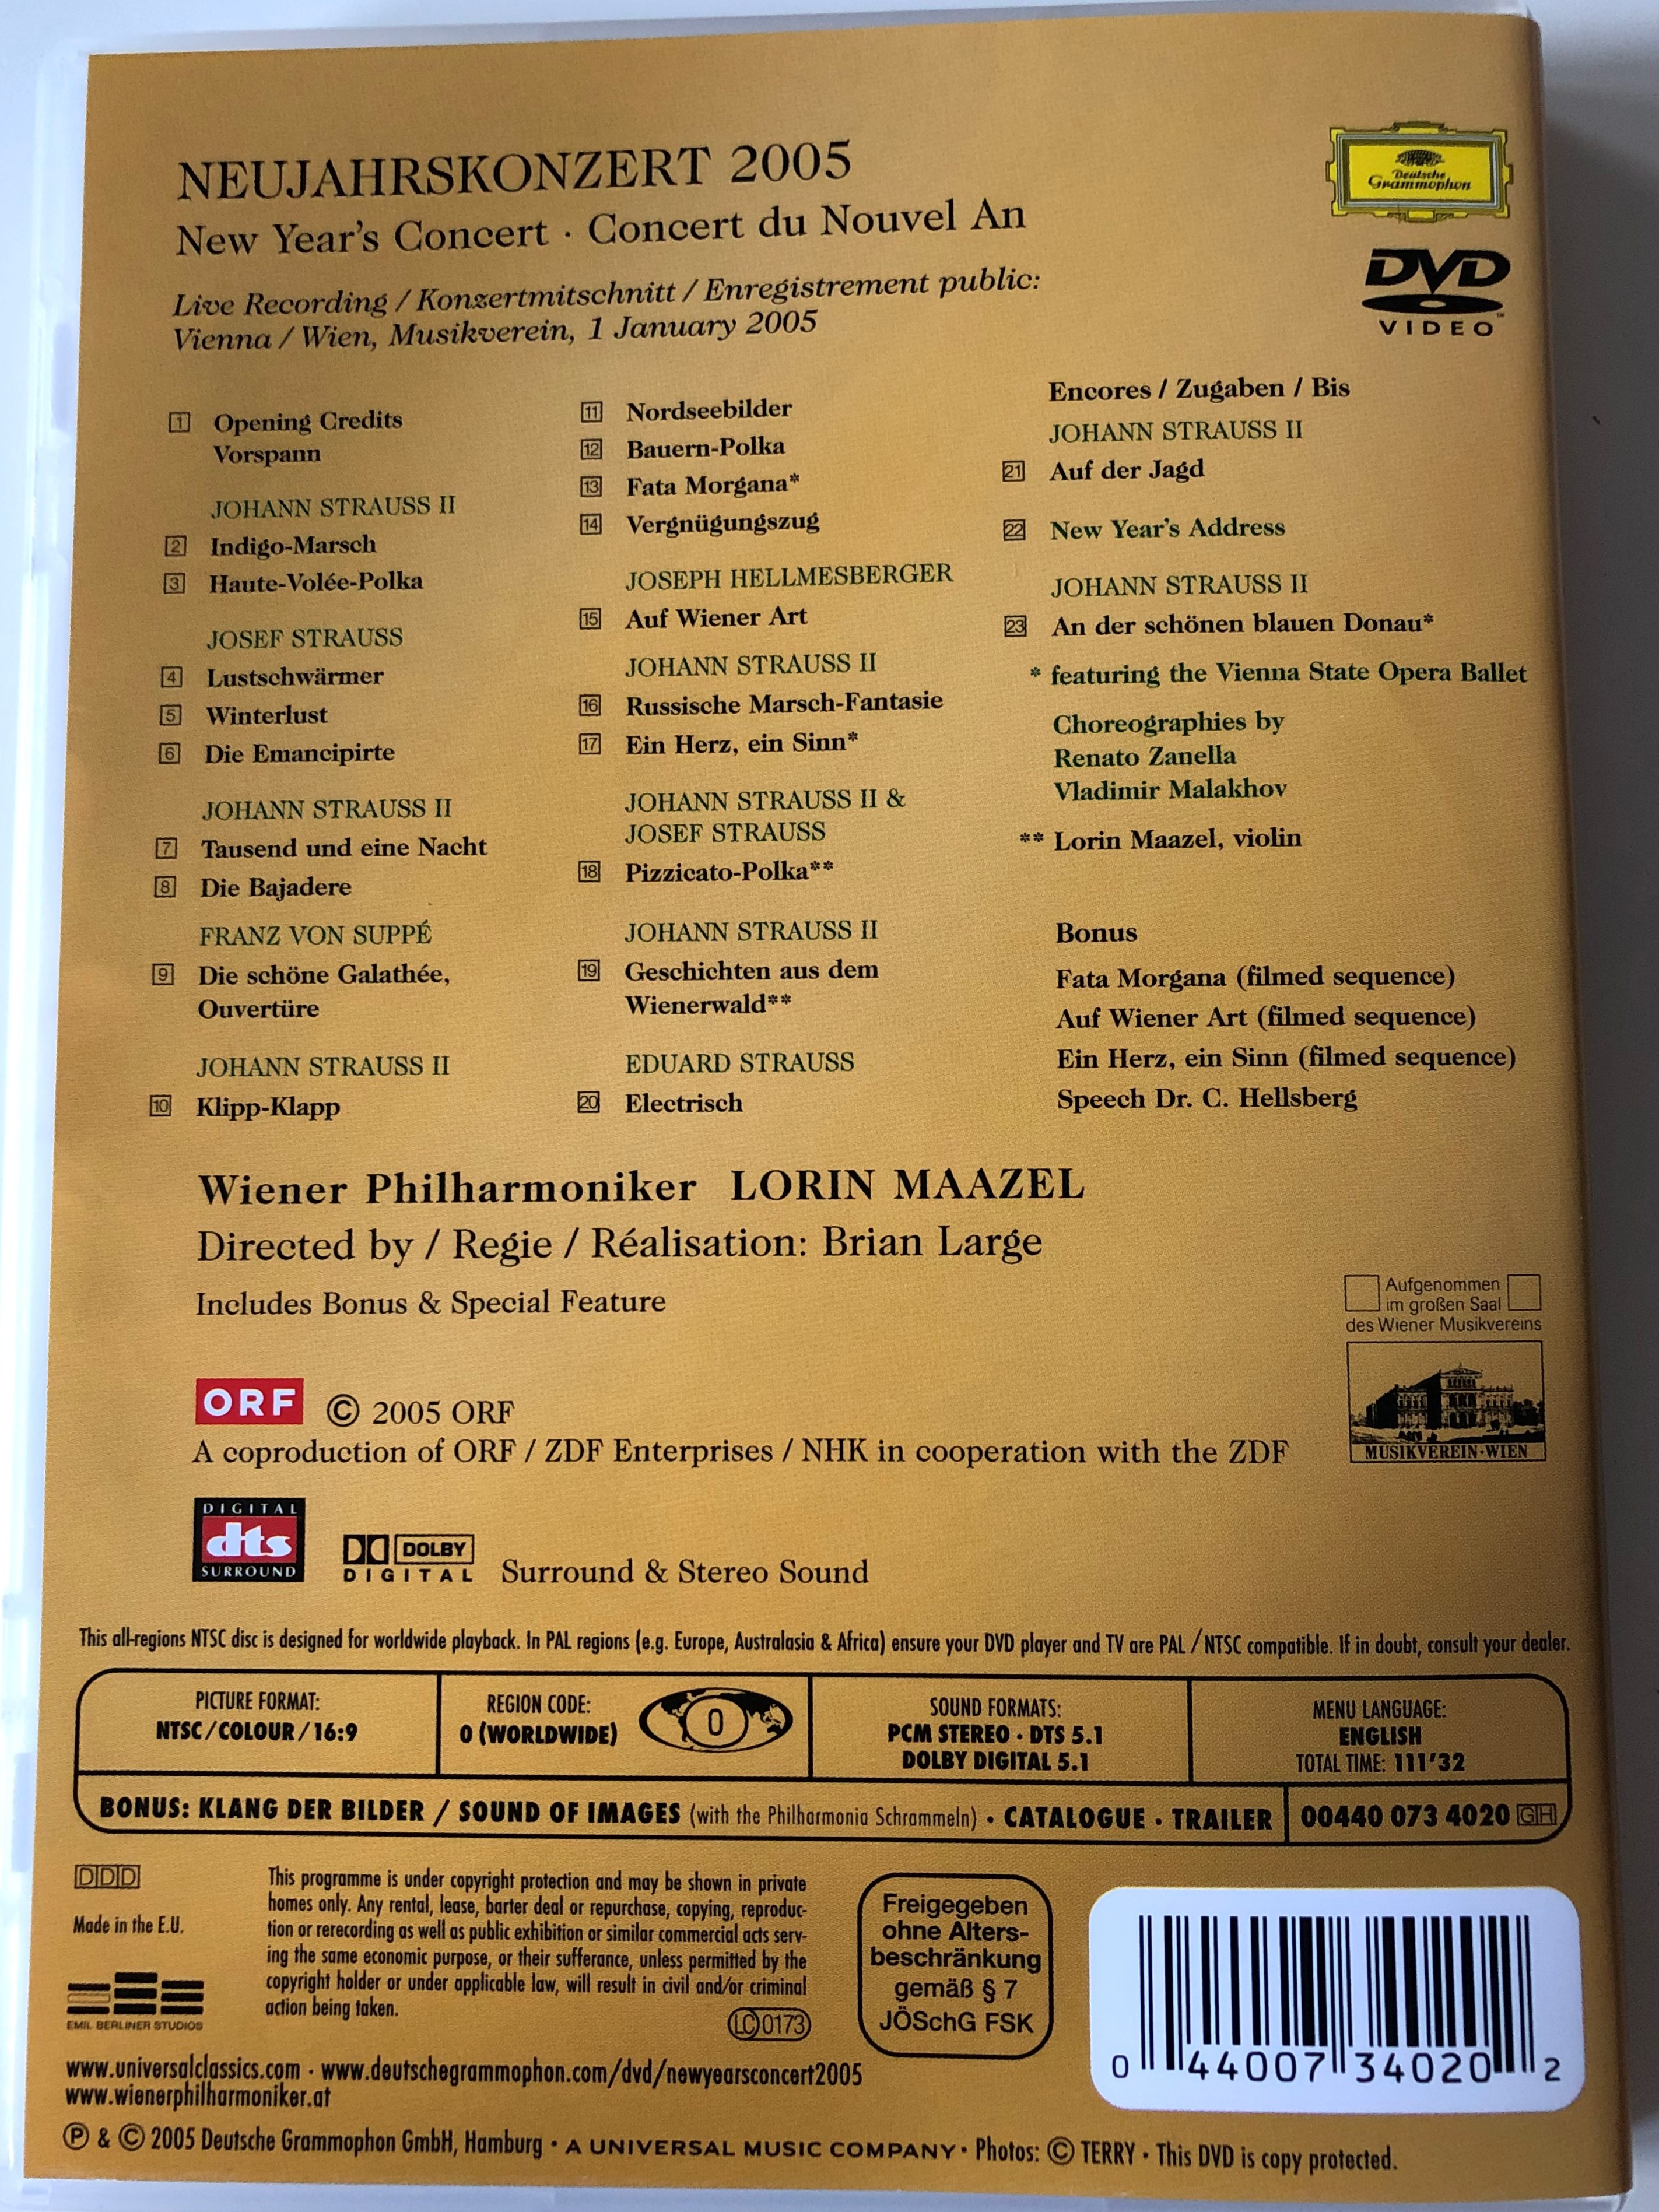 Neujahrskonzert 2005 DVD New Year's concert / Wiener Philharmoniker /  Conducted by Lorin Maazel / Directed by Brian Large / Deutsche Grammophon -  bibleinmylanguage